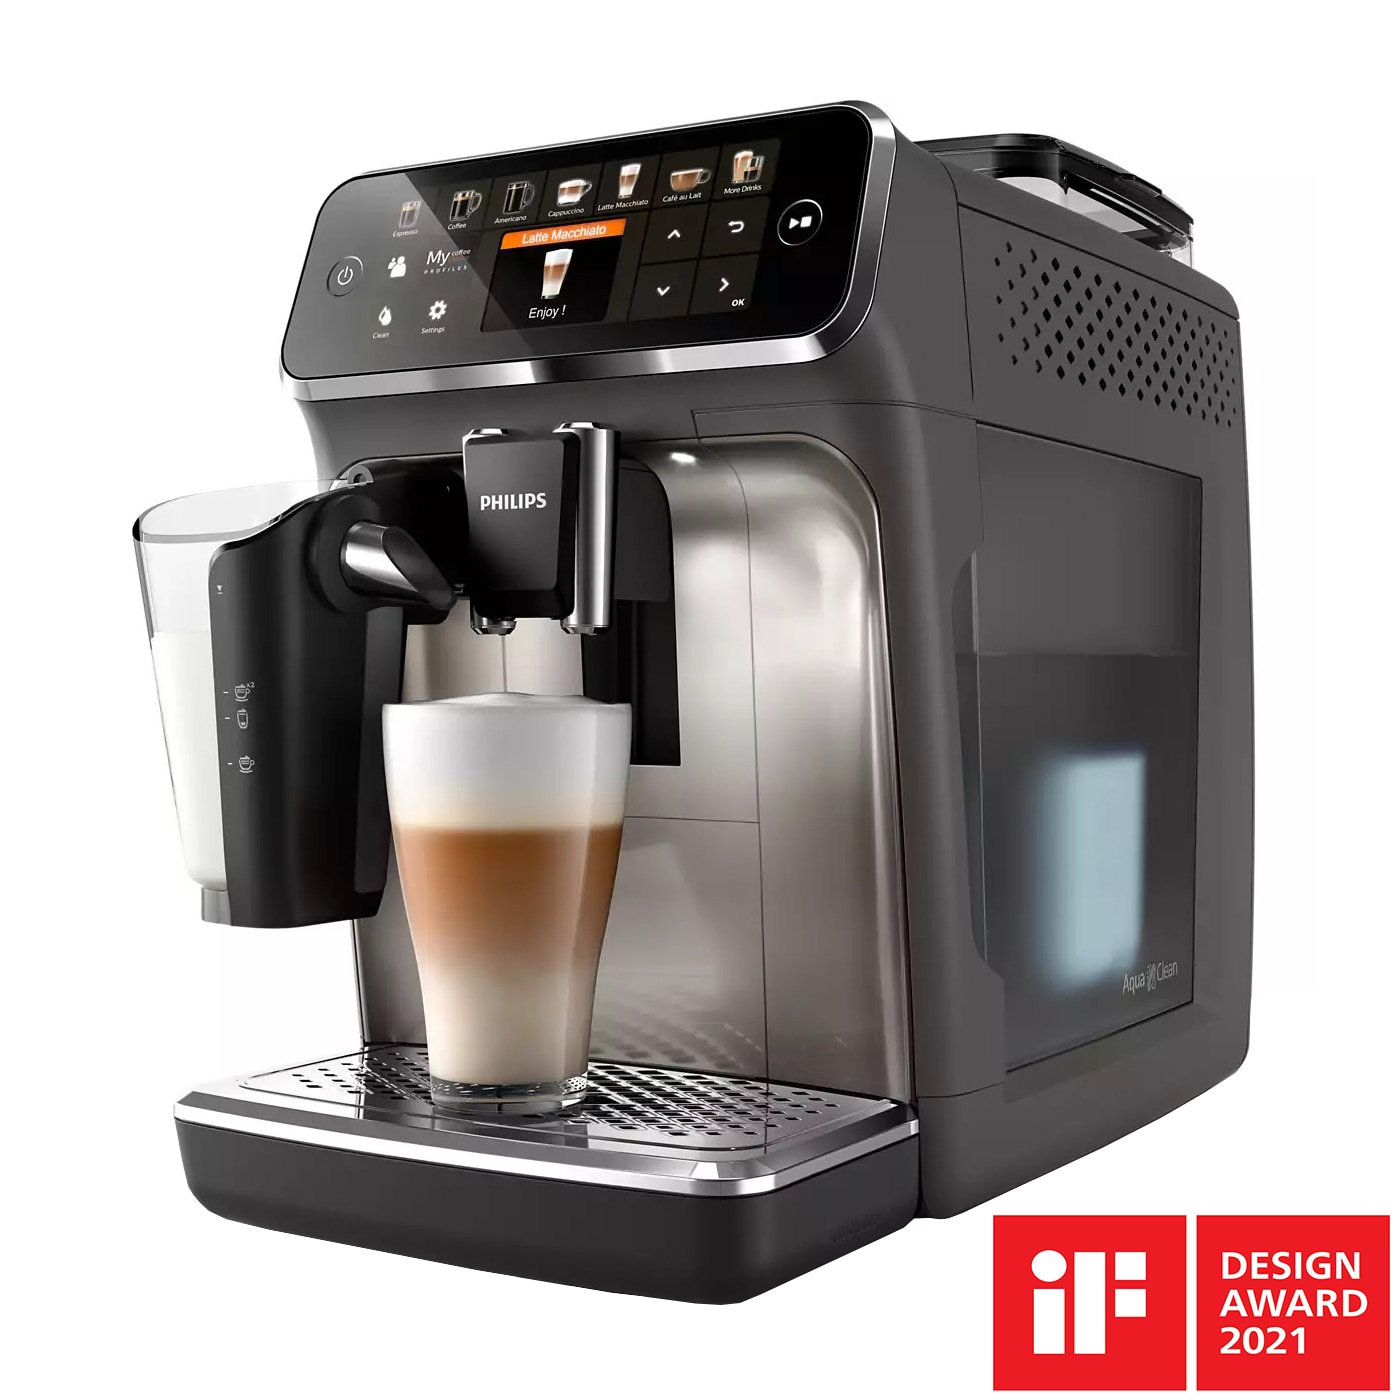 Review pentru automat Philips 5400 EP5444/90, sistem lapte LatteGo, bauturi, display digital TFT si pictograme color, filtru AquaClean, rasnita ceramica, optiune cafea macinata, functie MEMO 4 profiluri, Gri